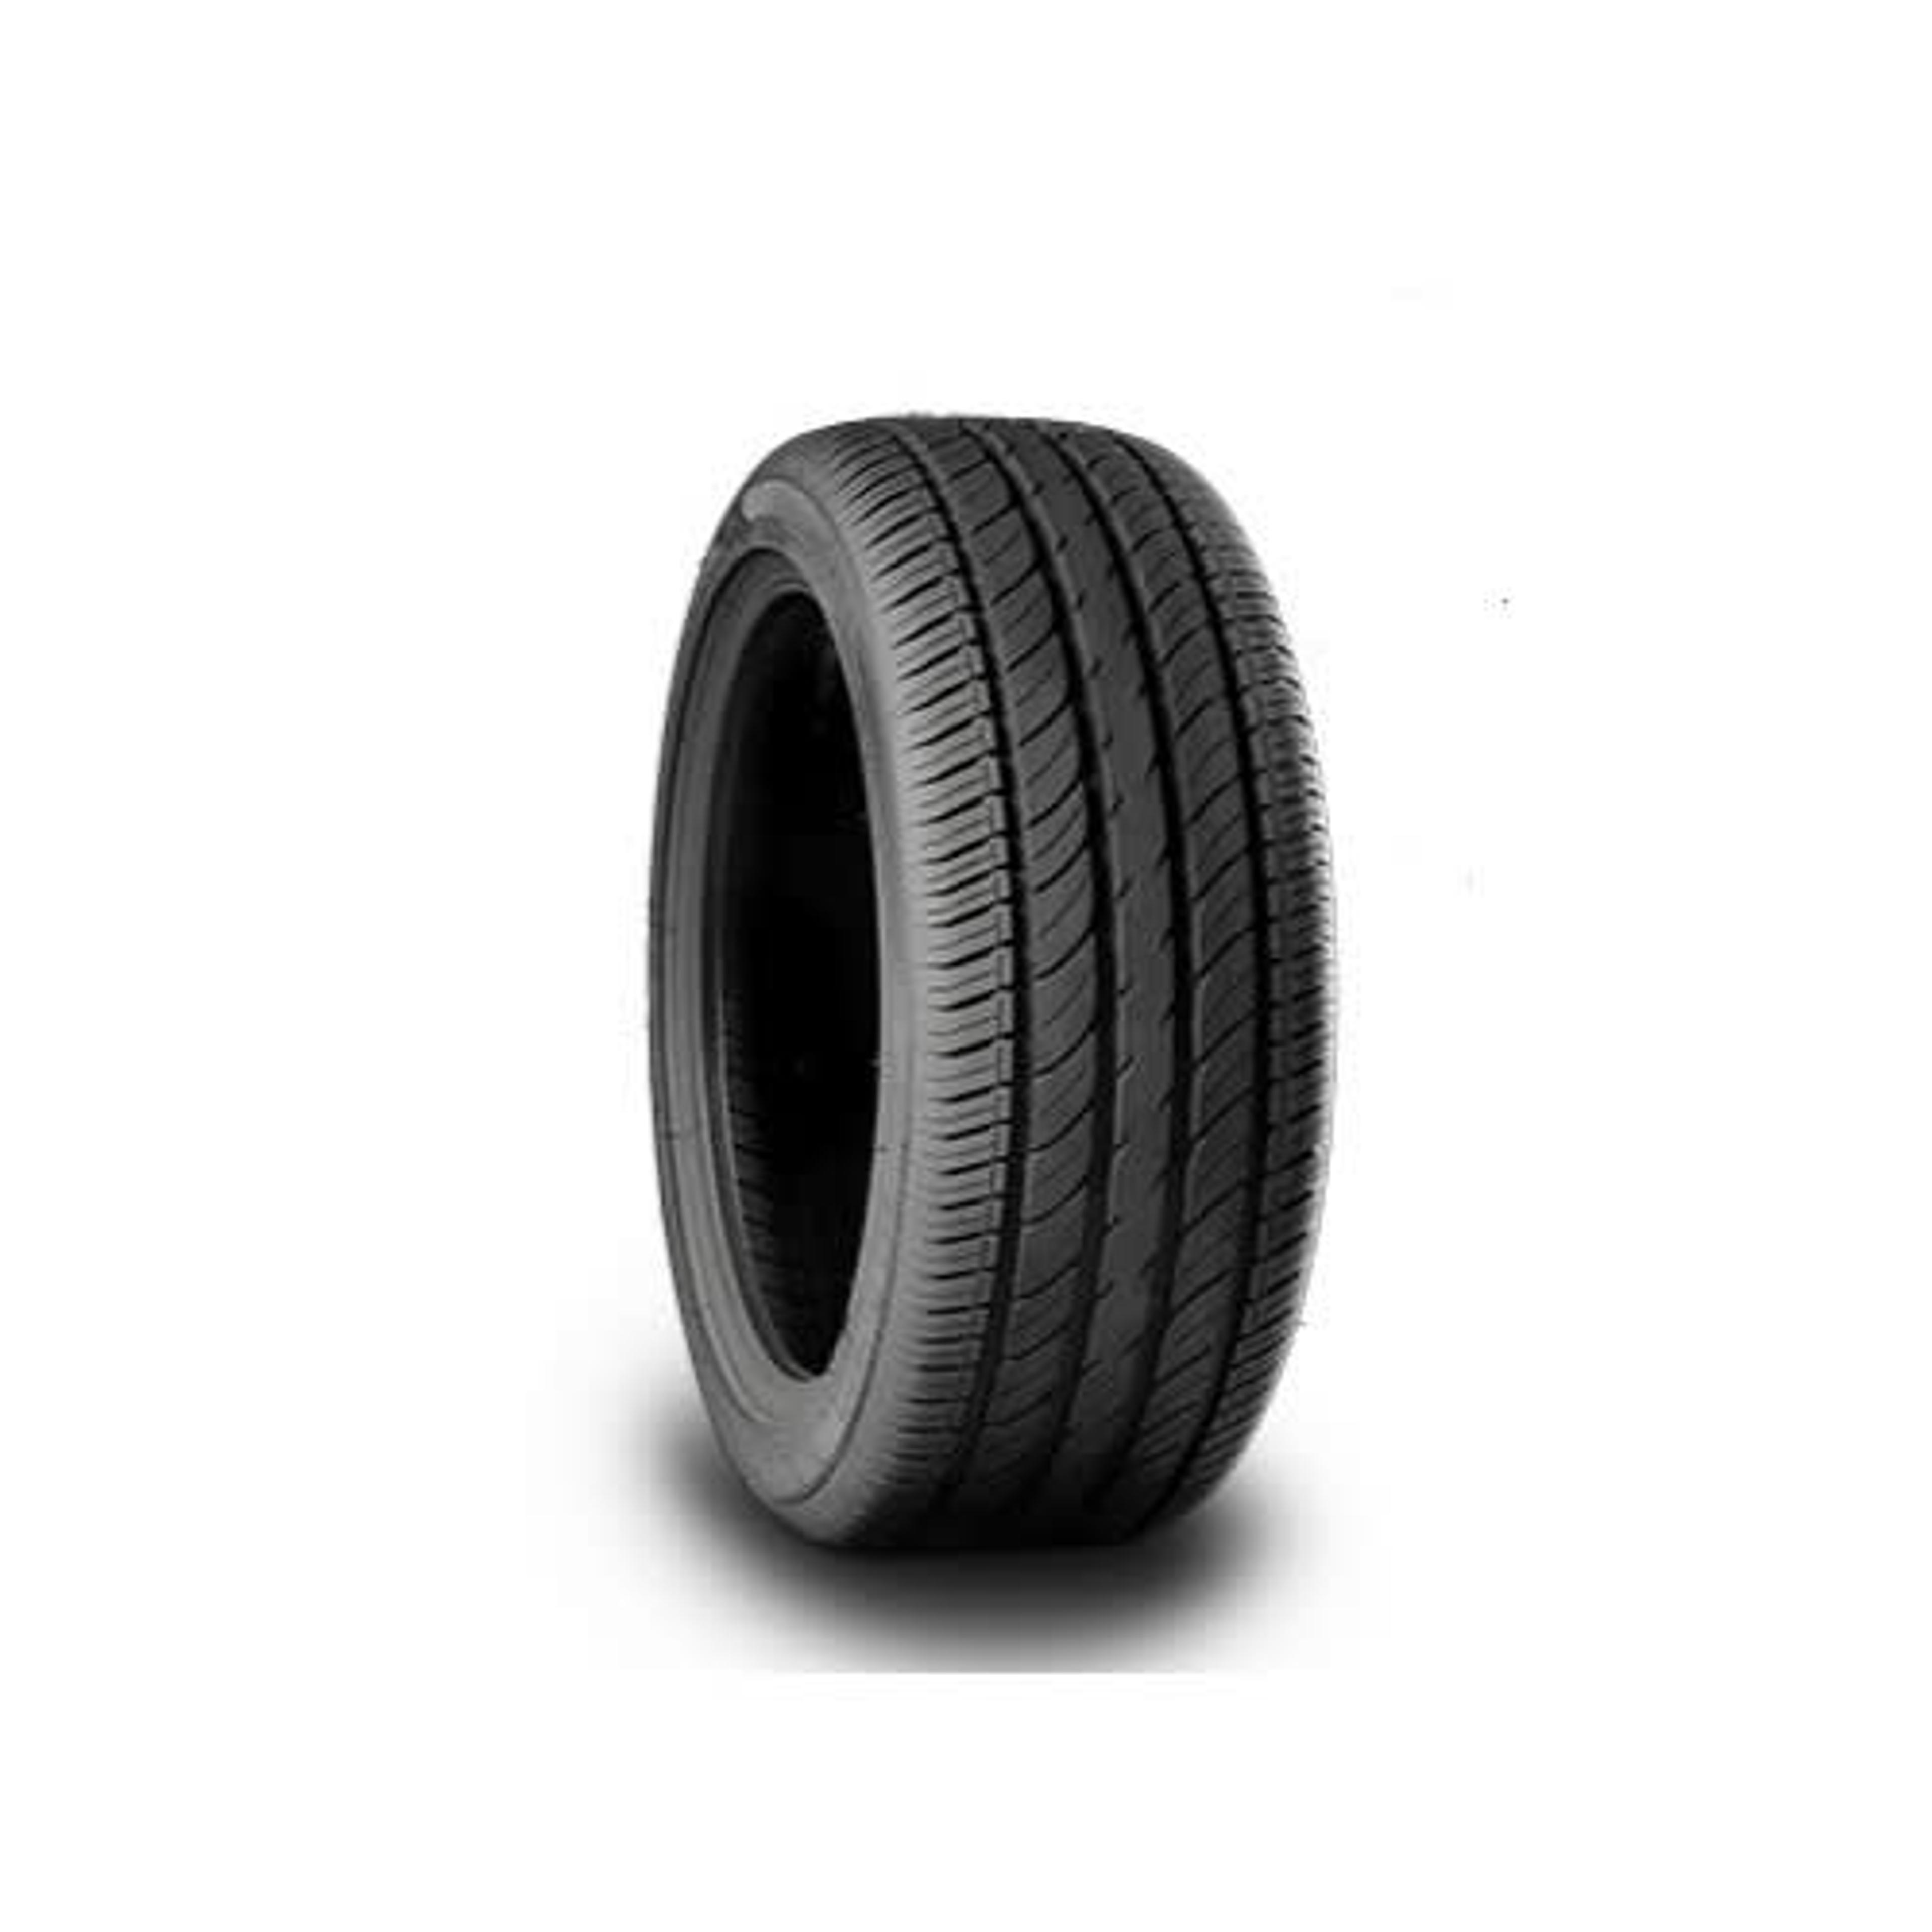 Buy Waterfall Eco Dynamic Tires Online